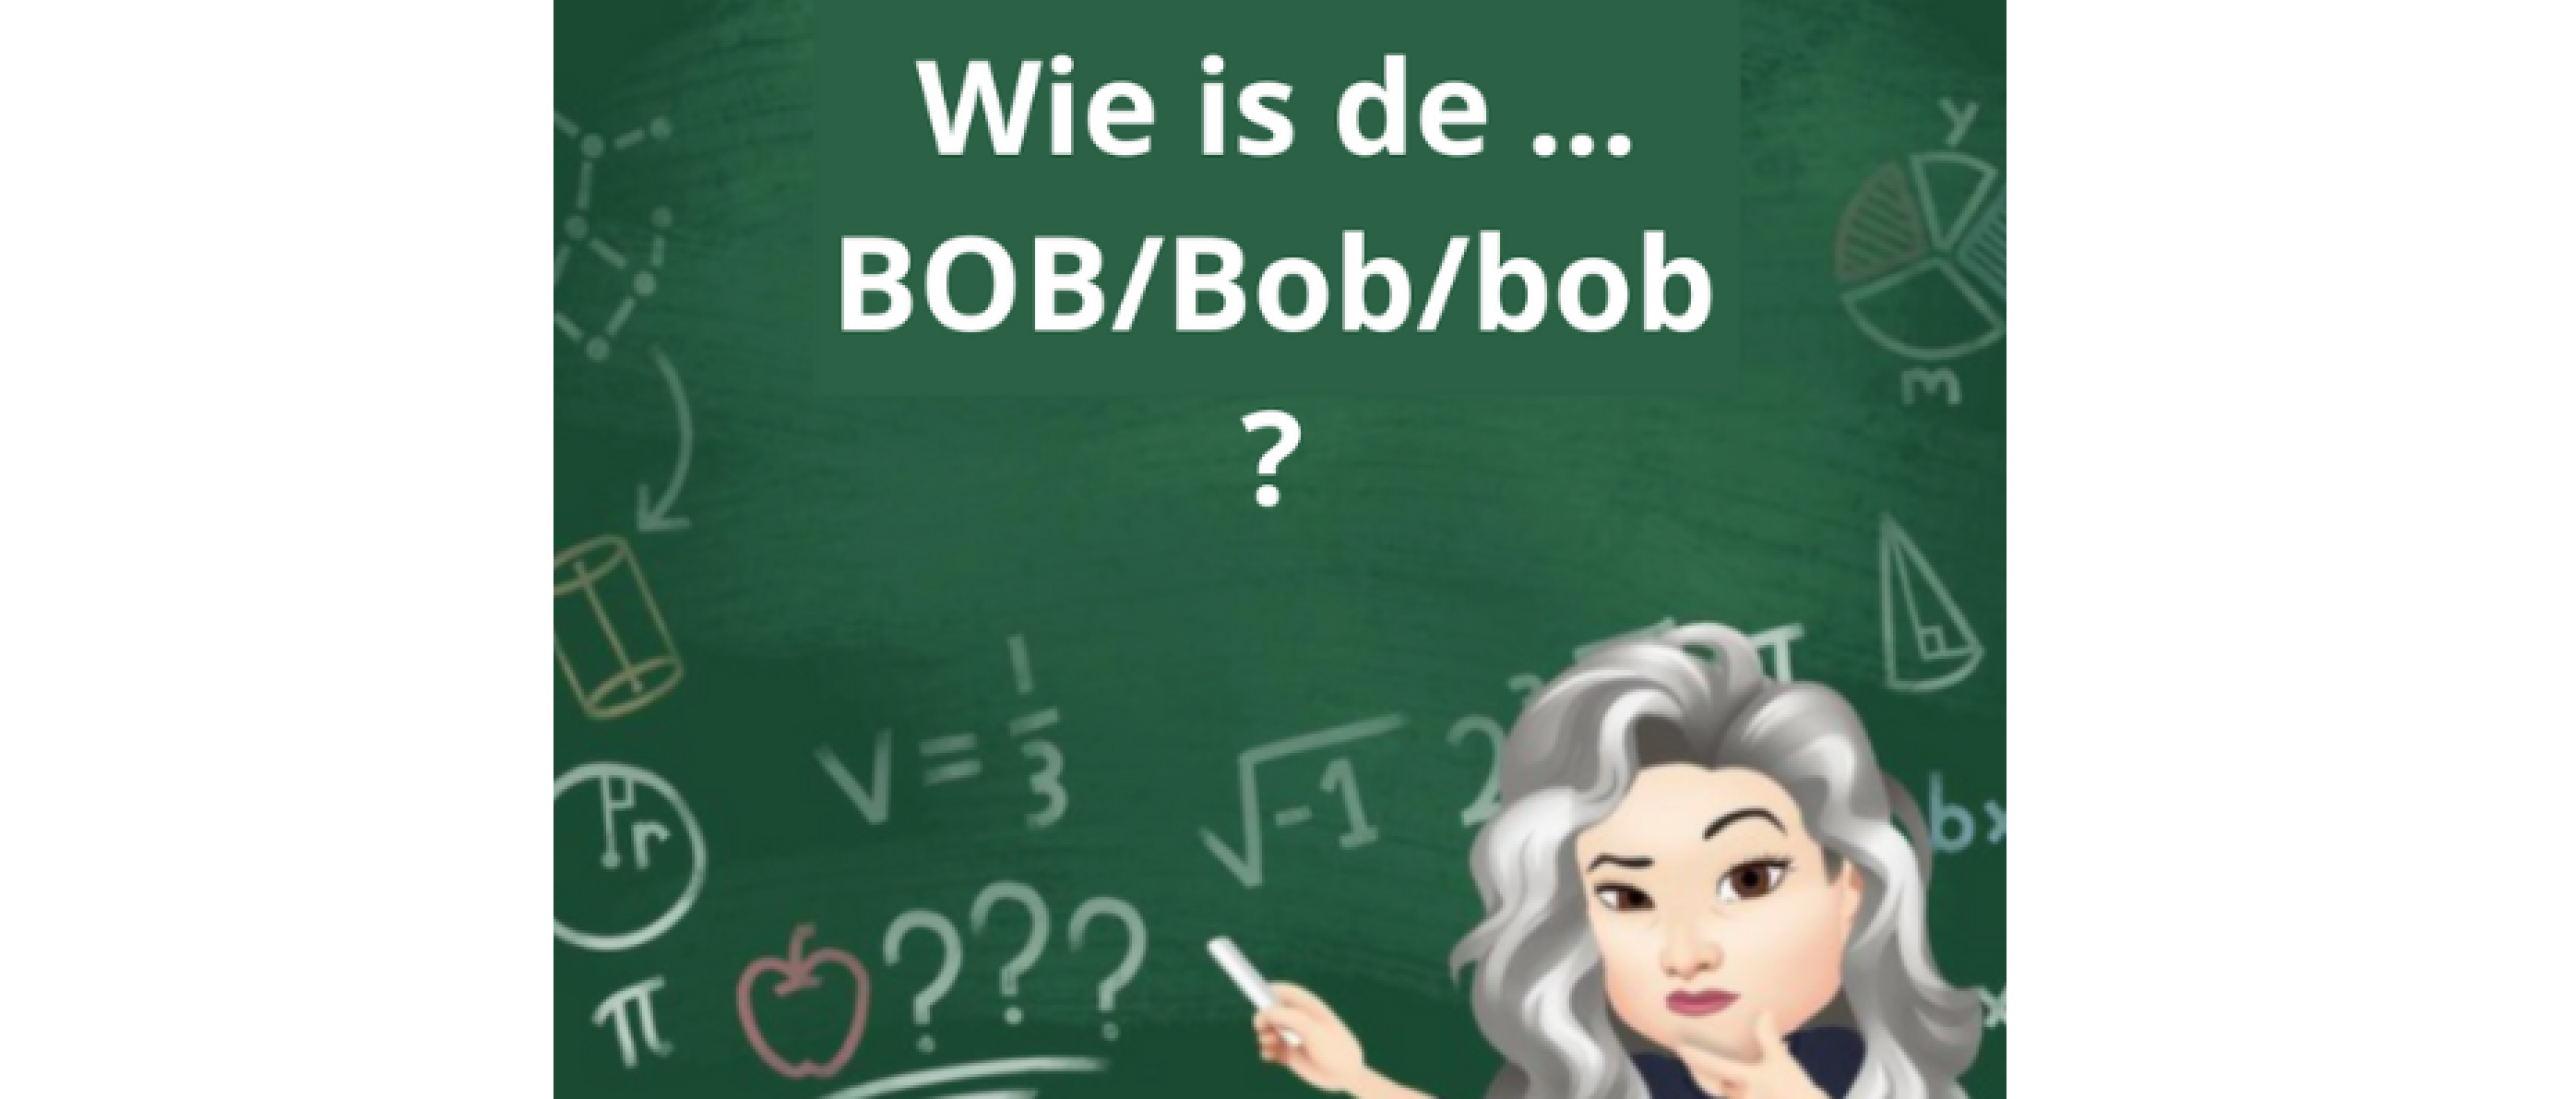 Wie is de BOB/Bob/bob?